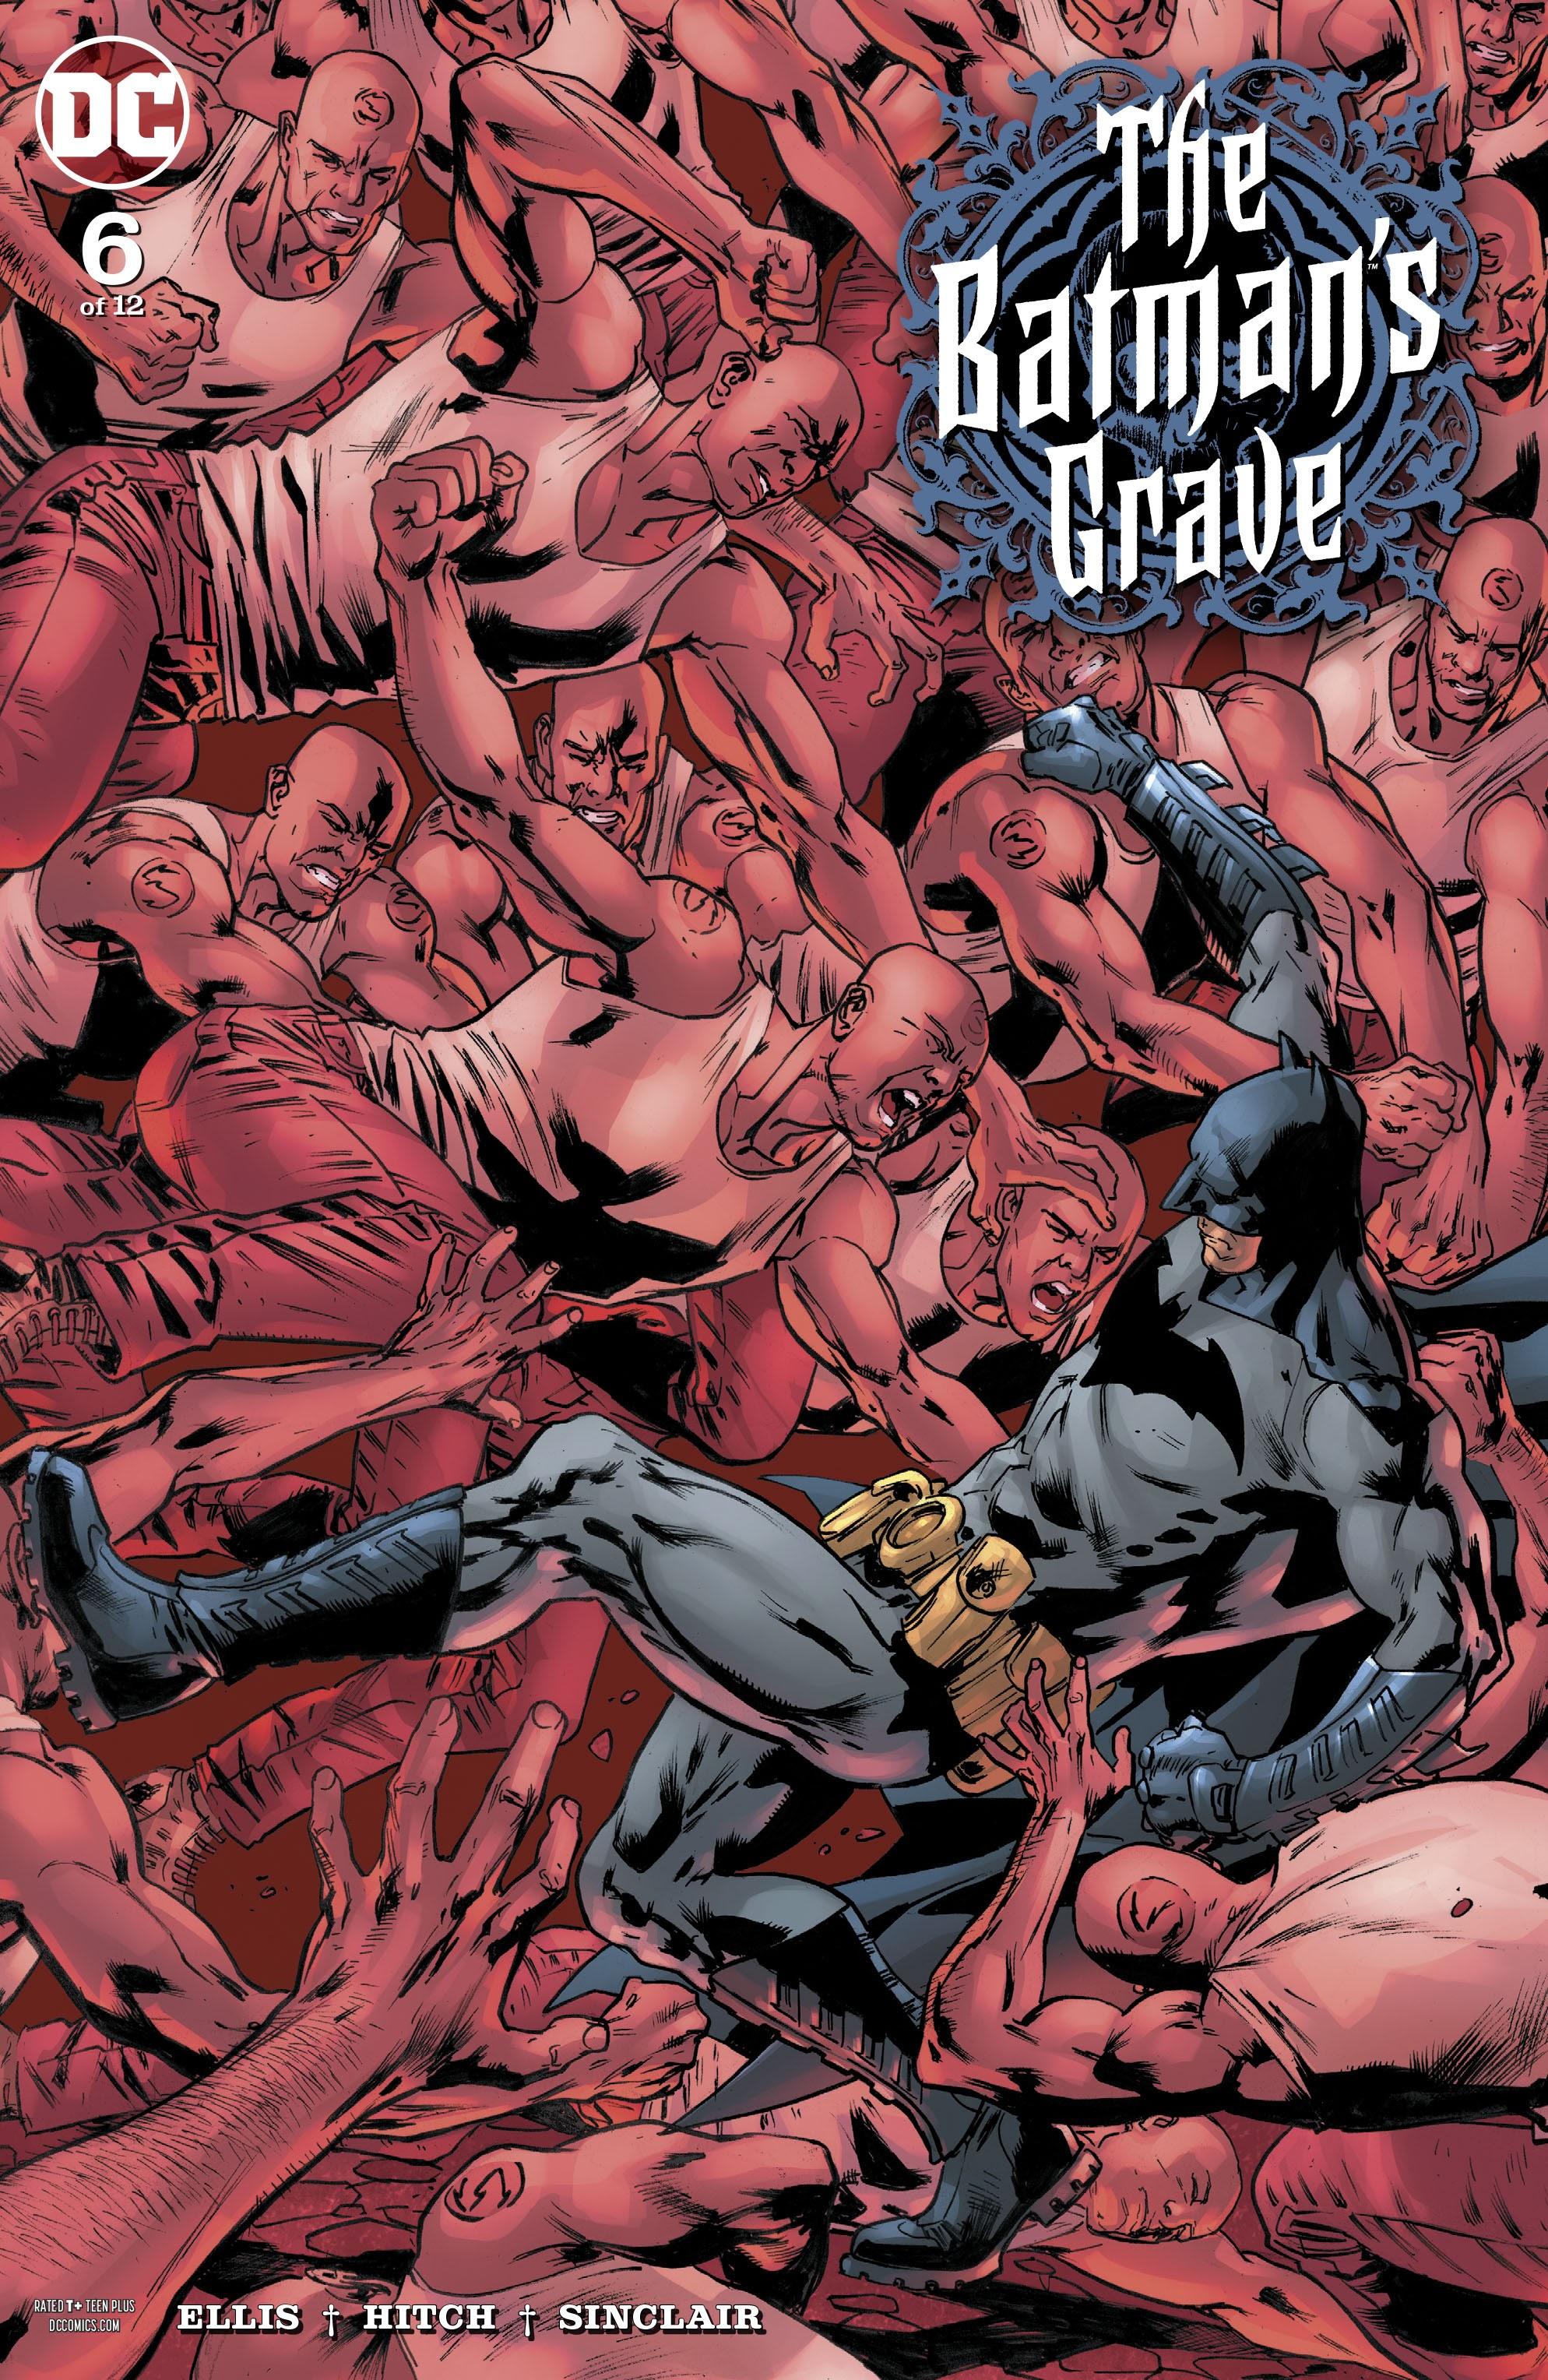 The Batman's Grave Vol. 1 #6